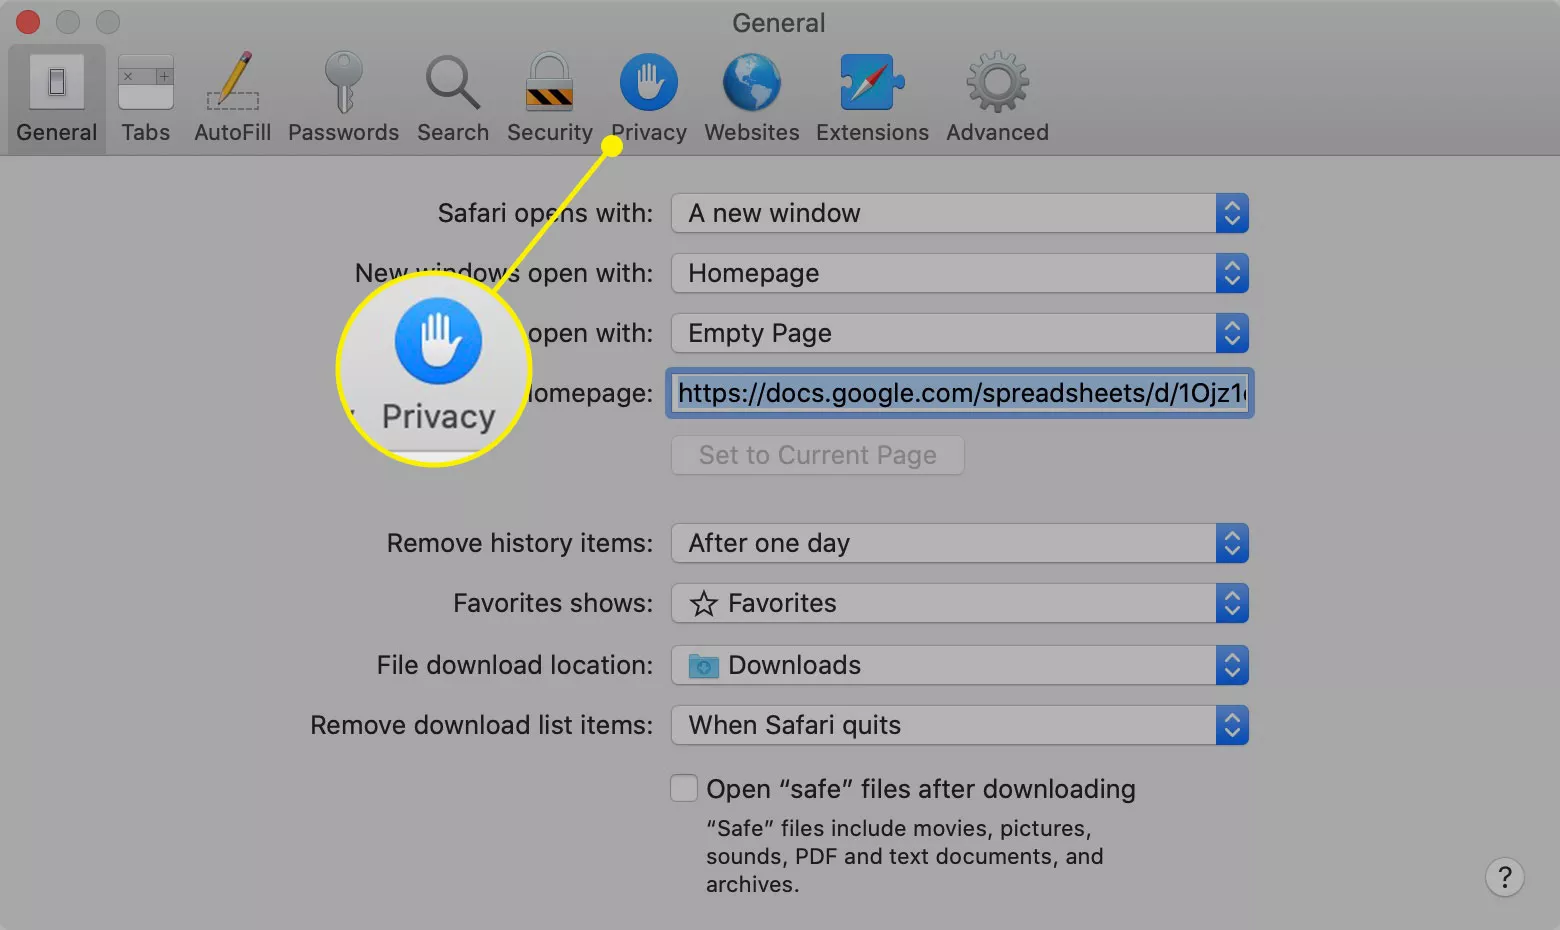 The Privacy tab in Safari preferences